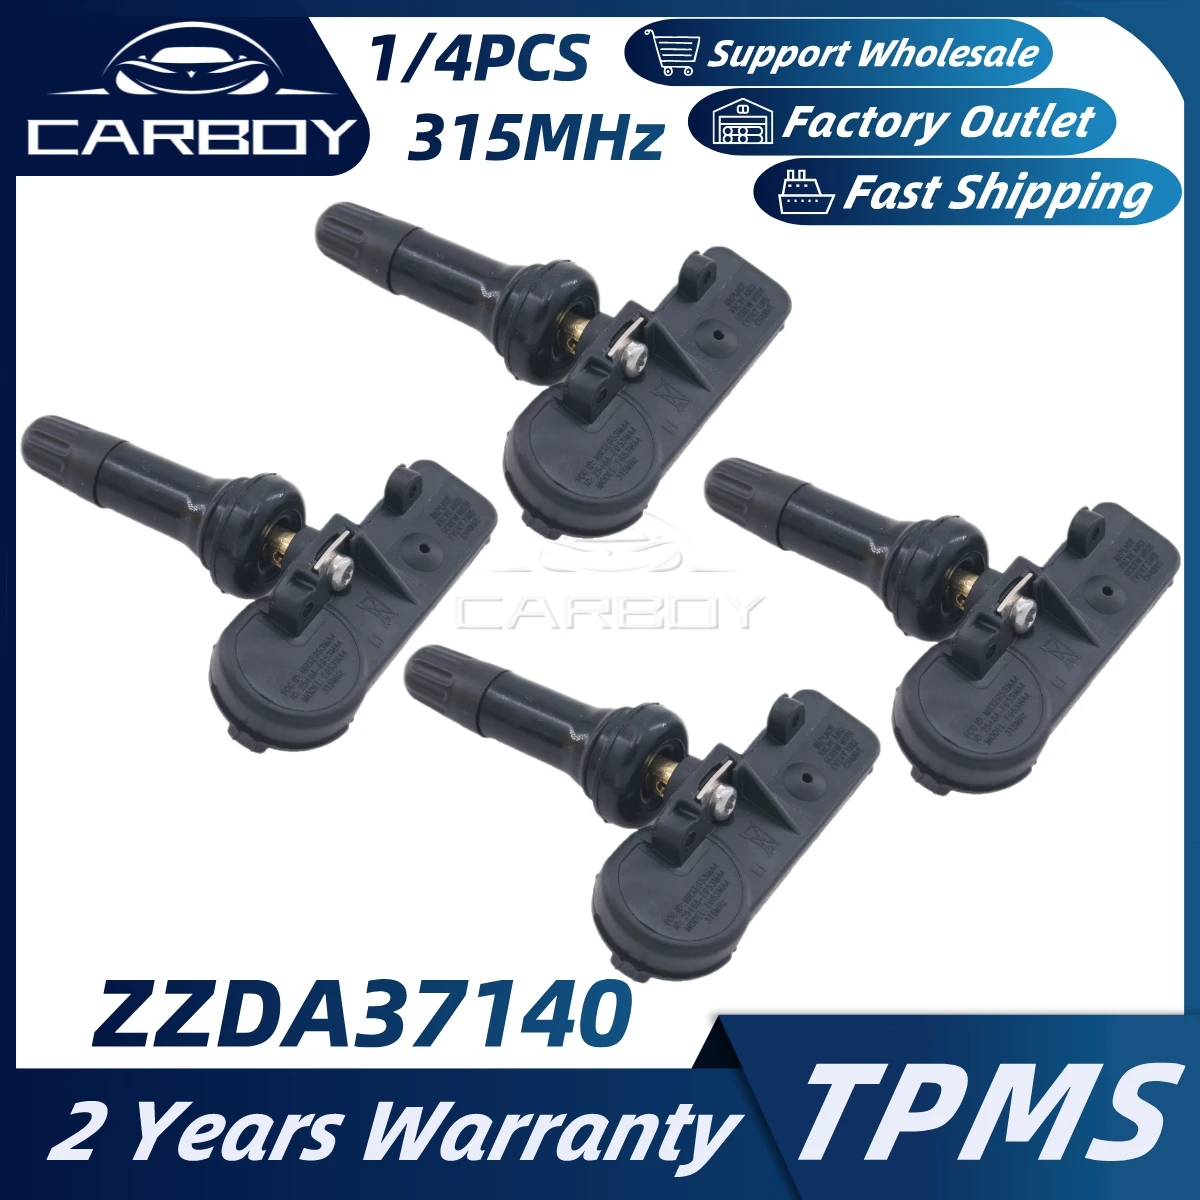 

ZZDA37140 TPMS Tire Pressure Monitoring System For Lincoln MKC MKZ MKX Navigator Ford E-350 F-250 Super Duty Mercury Mariner